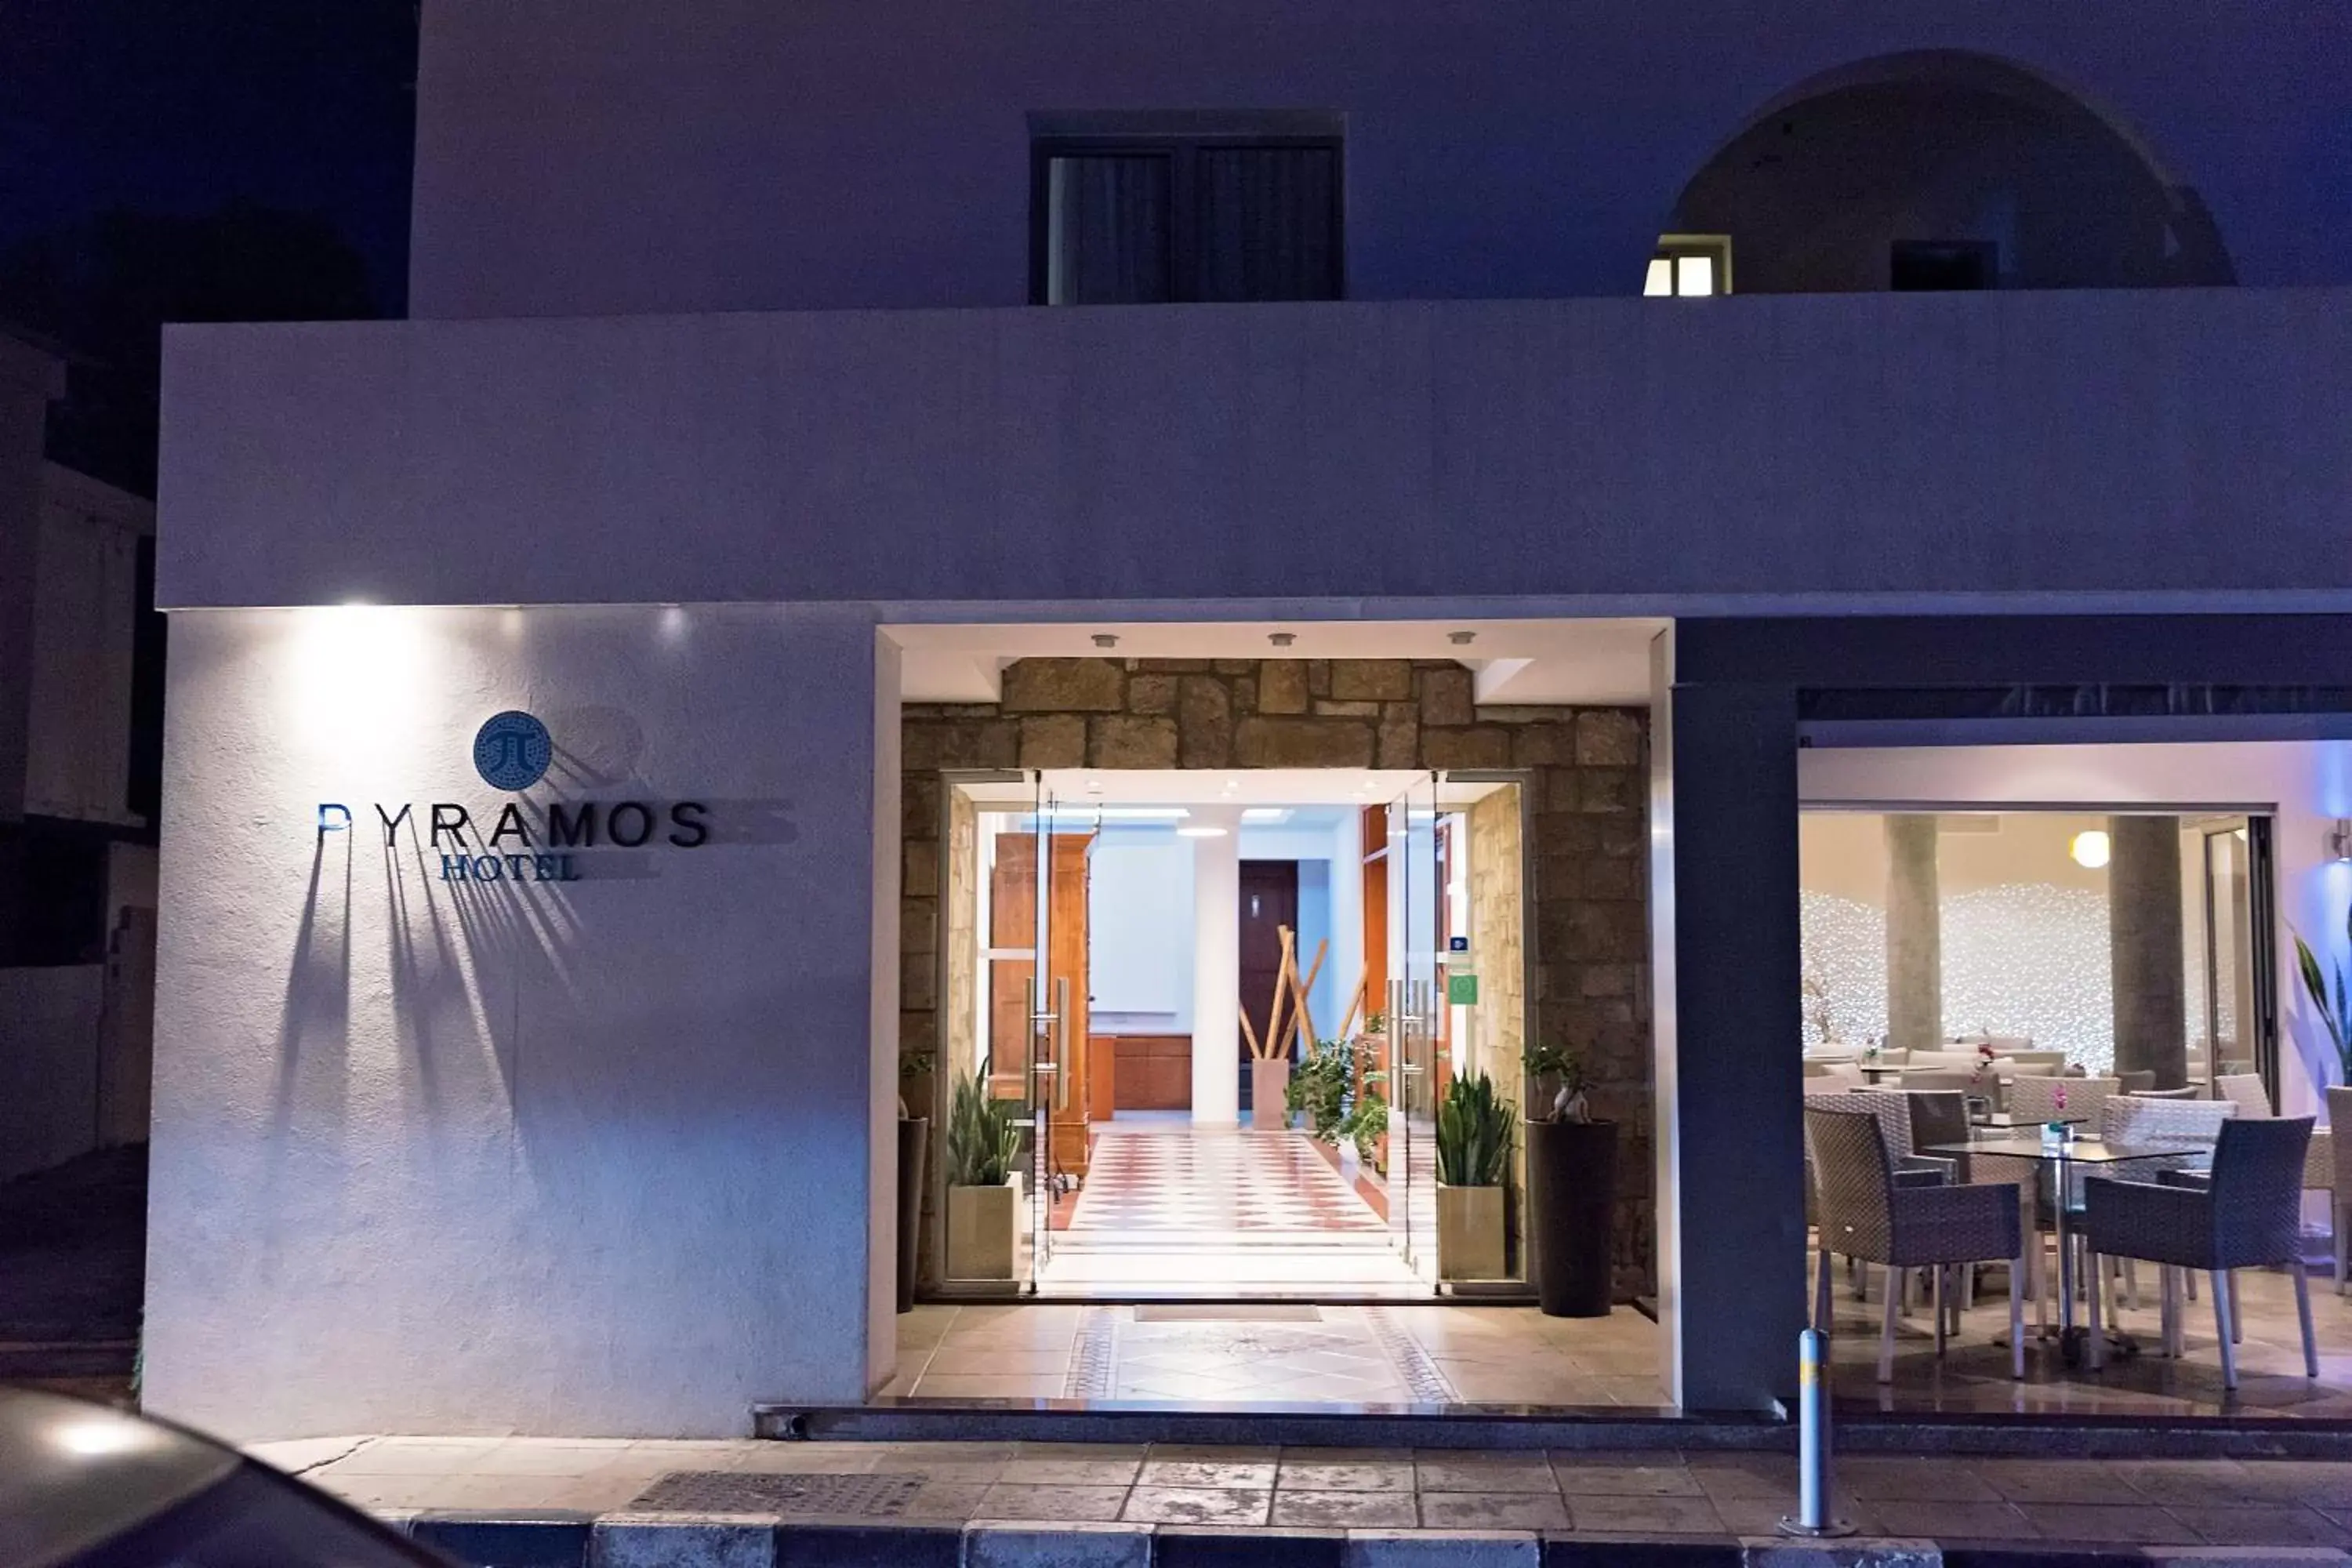 Facade/entrance in Pyramos Hotel